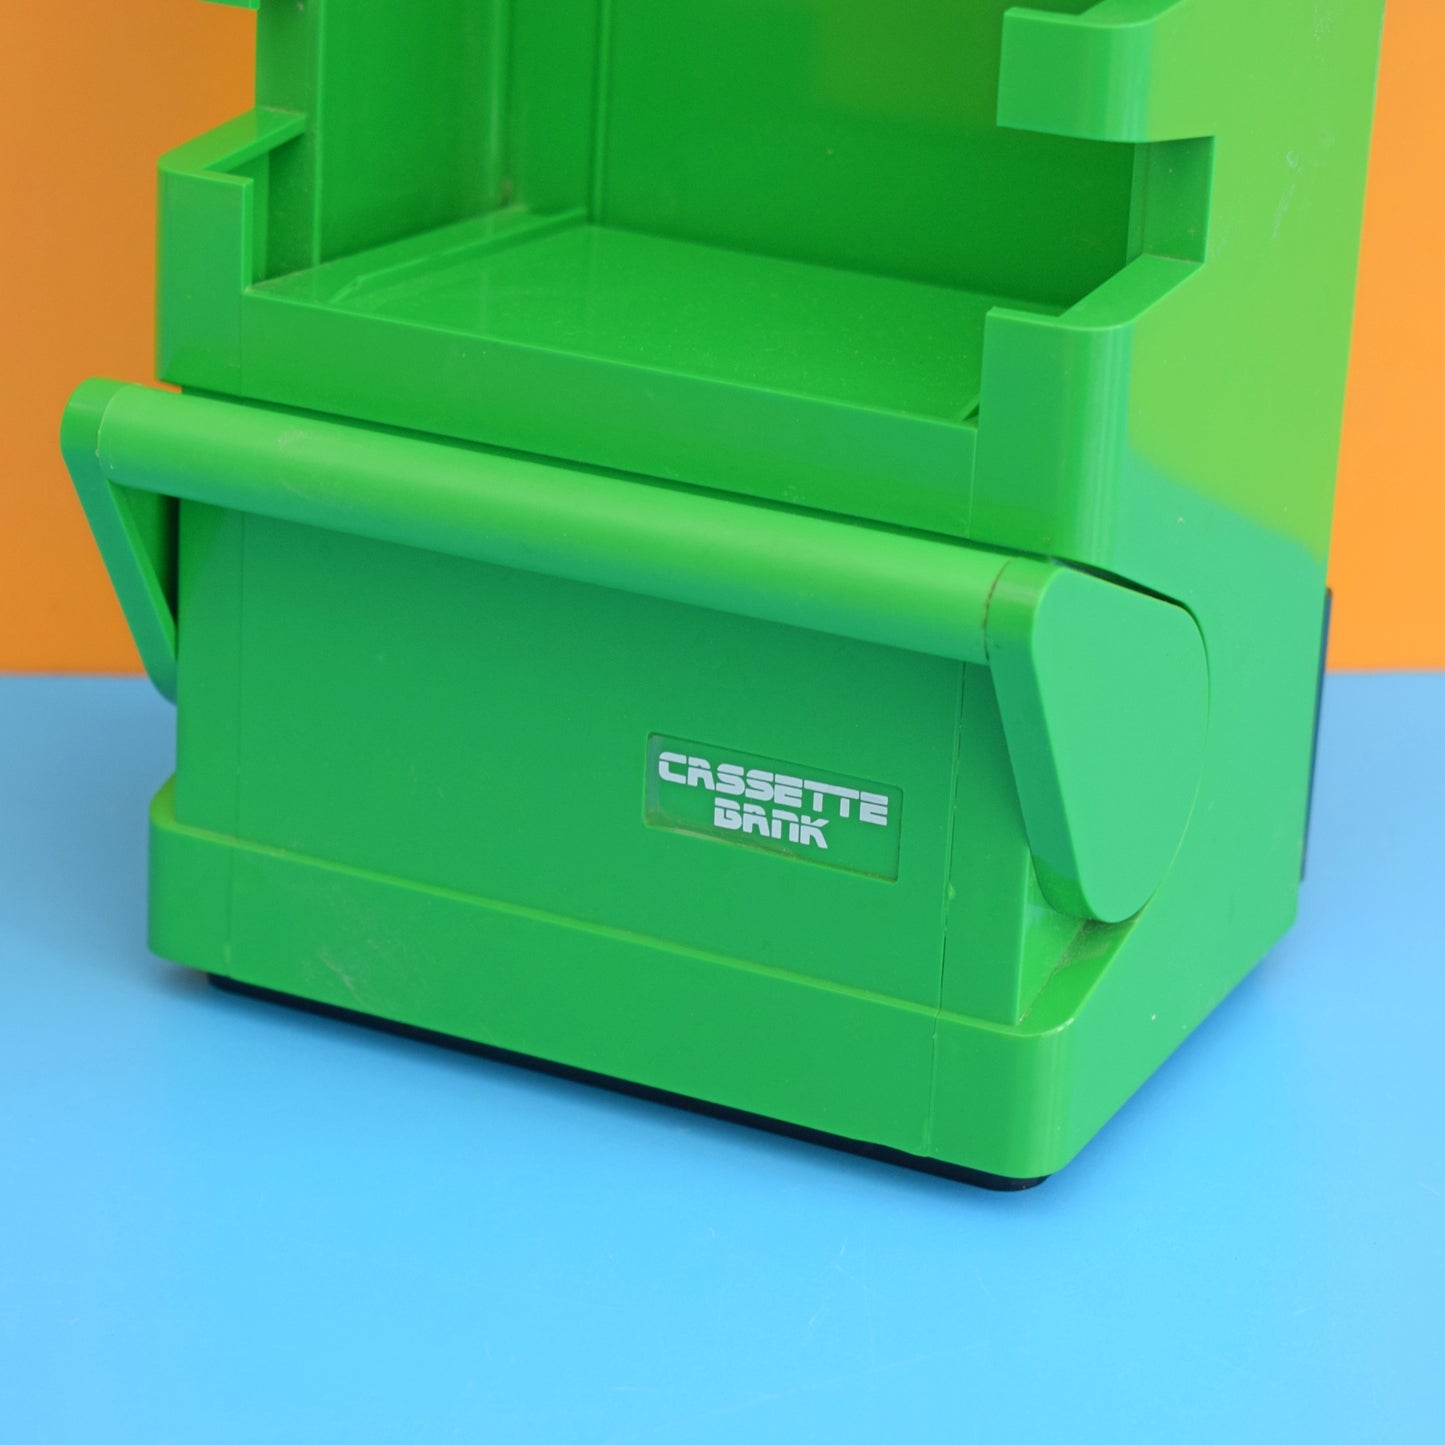 Vintage 1980s Cassette Tape Bank - Green Plastic